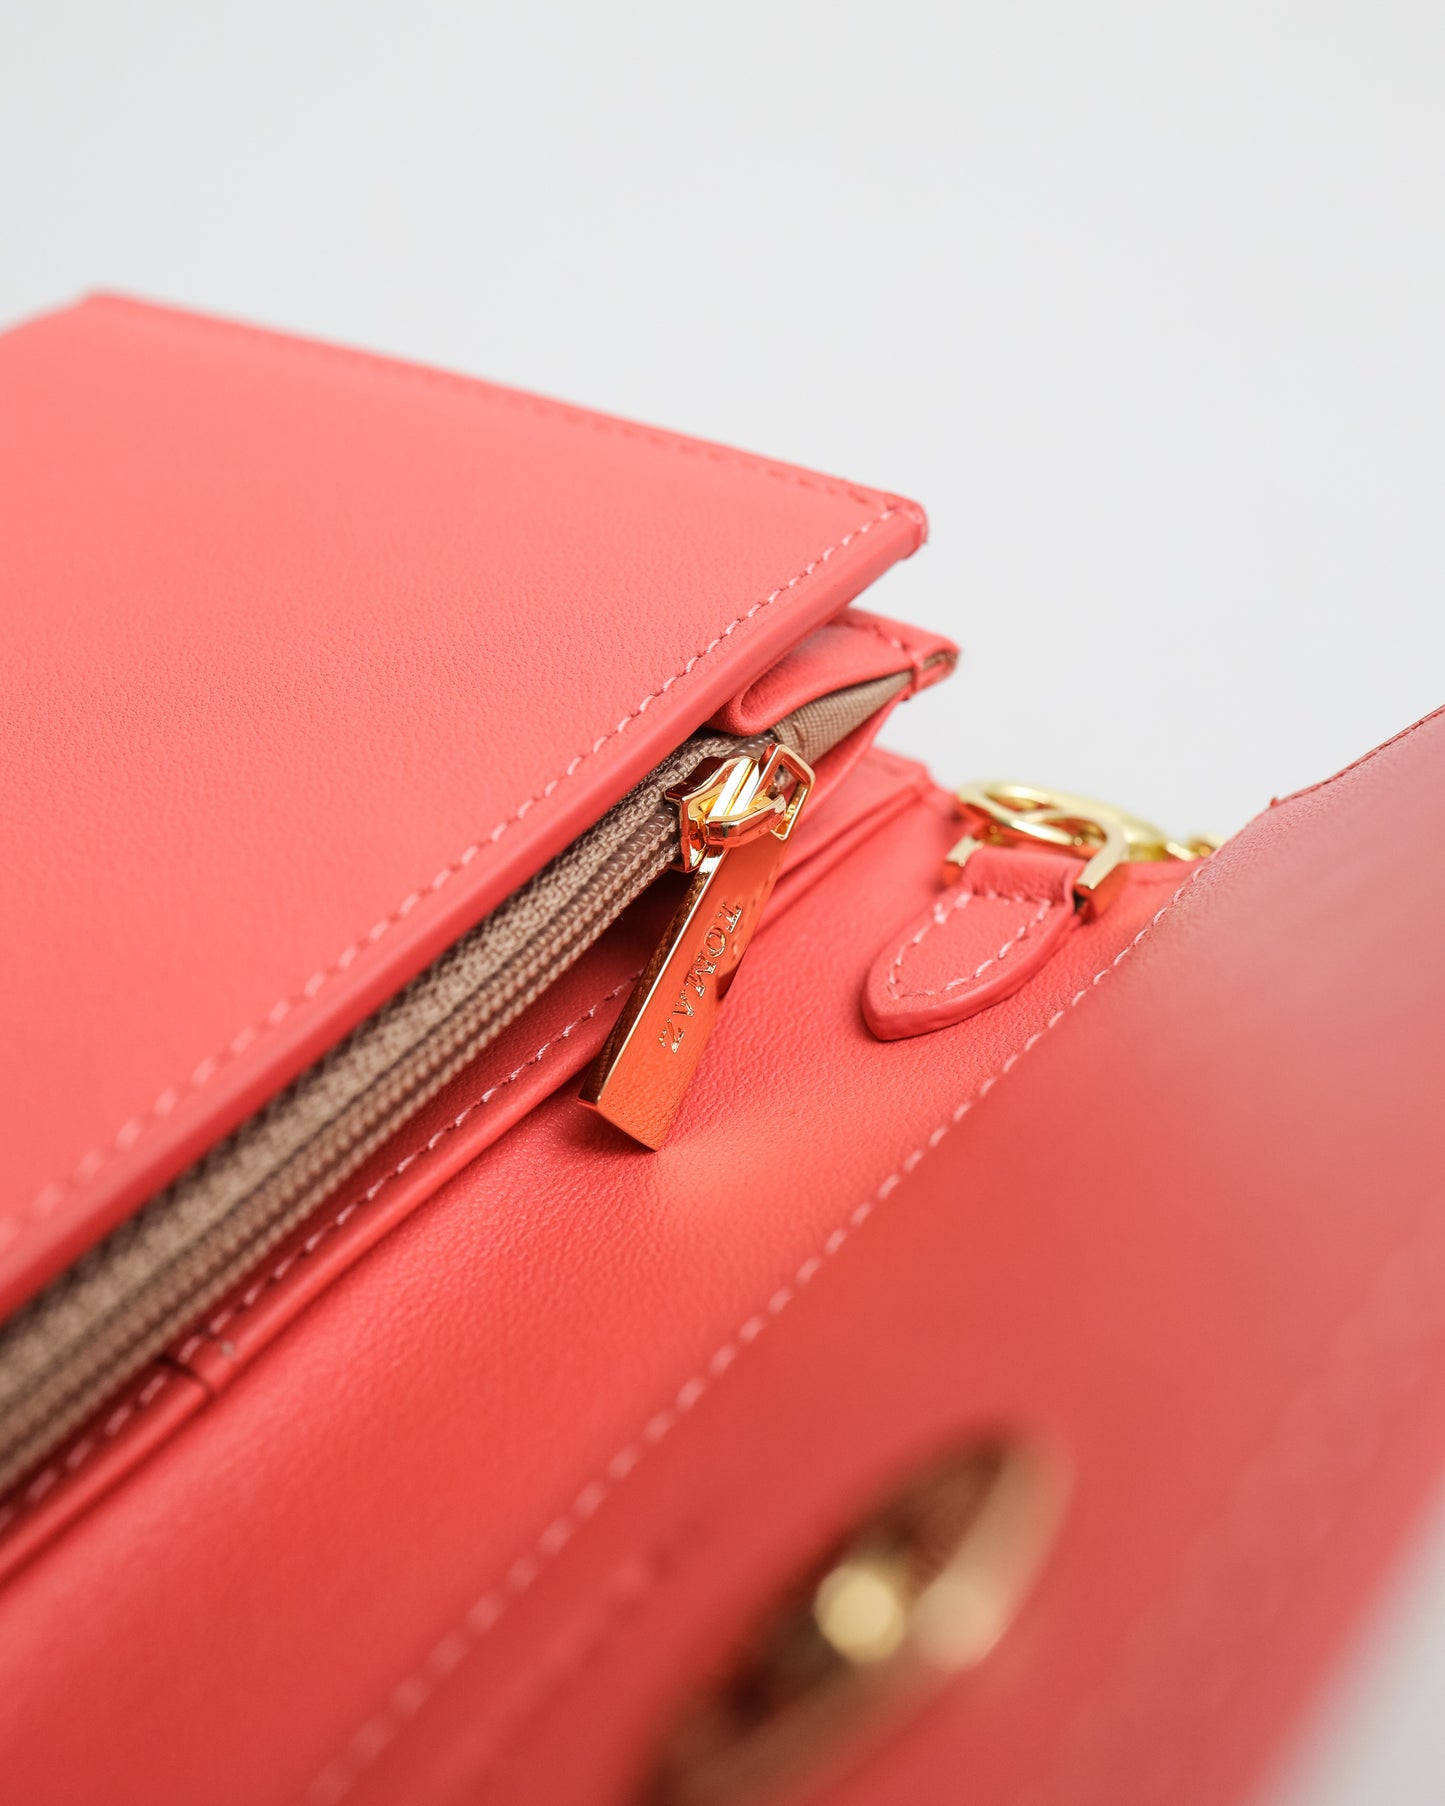 Tomaz BL187 Ladies Long Wallet (Light Pink)